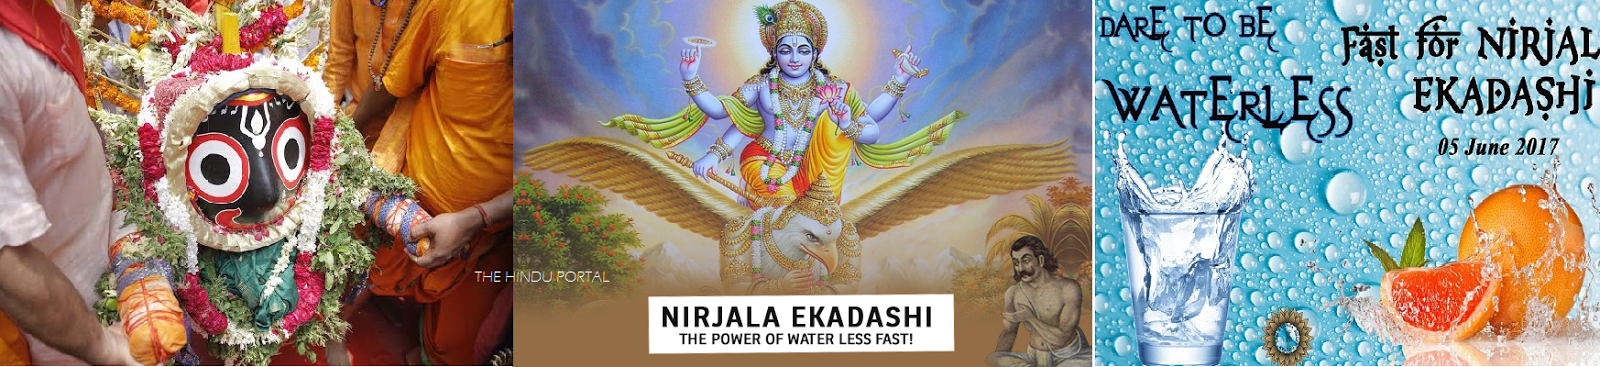 Nirjala Ekadashi - A Higher state of spirituality